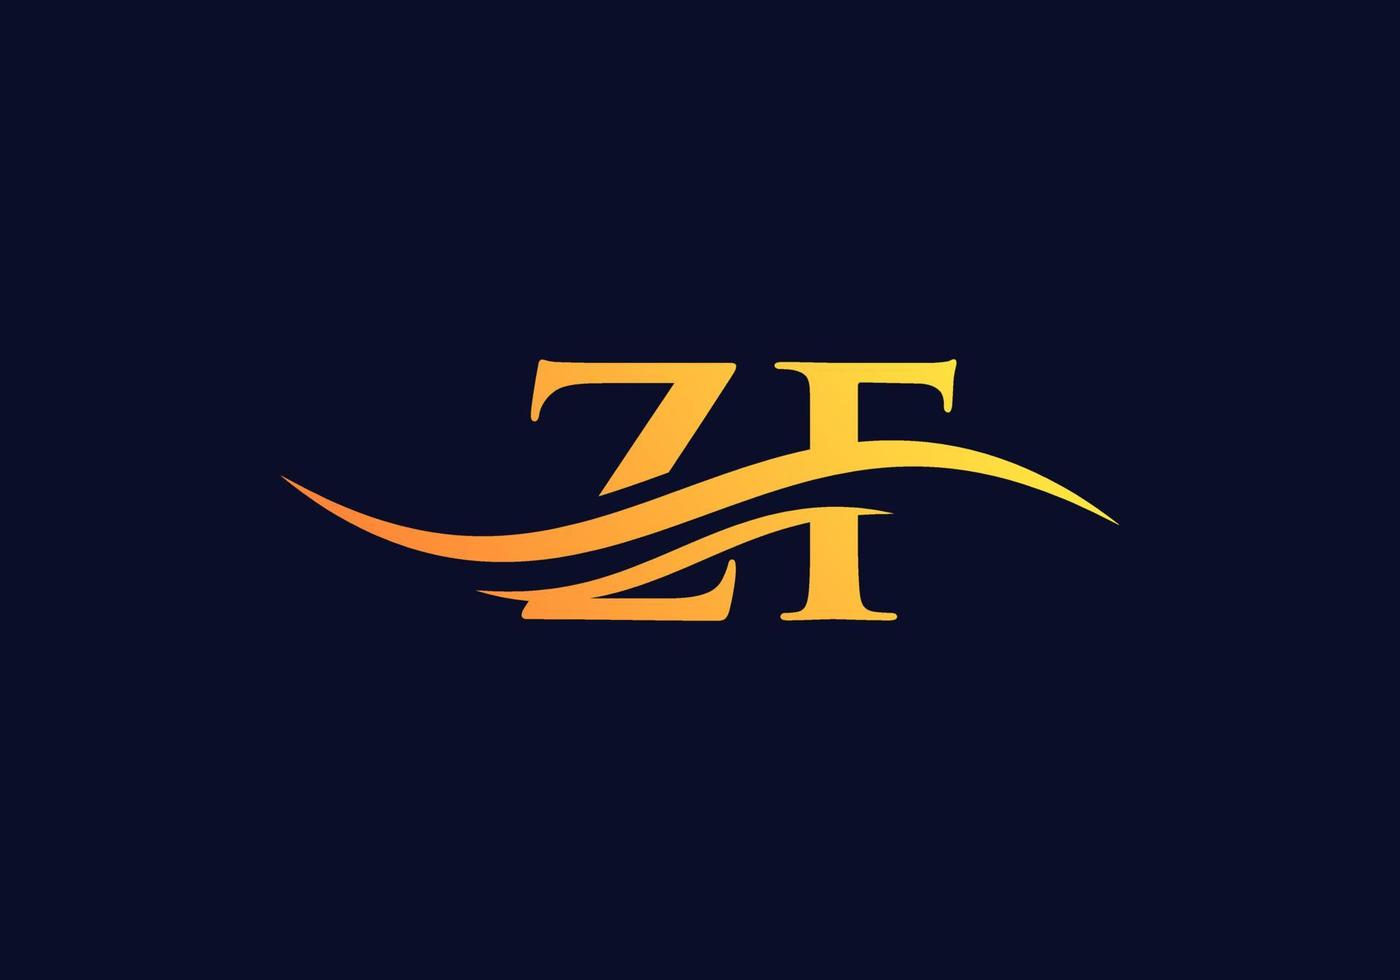 vetor de logotipo zf onda de água. design de logotipo zf de letra swoosh para negócios e identidade da empresa